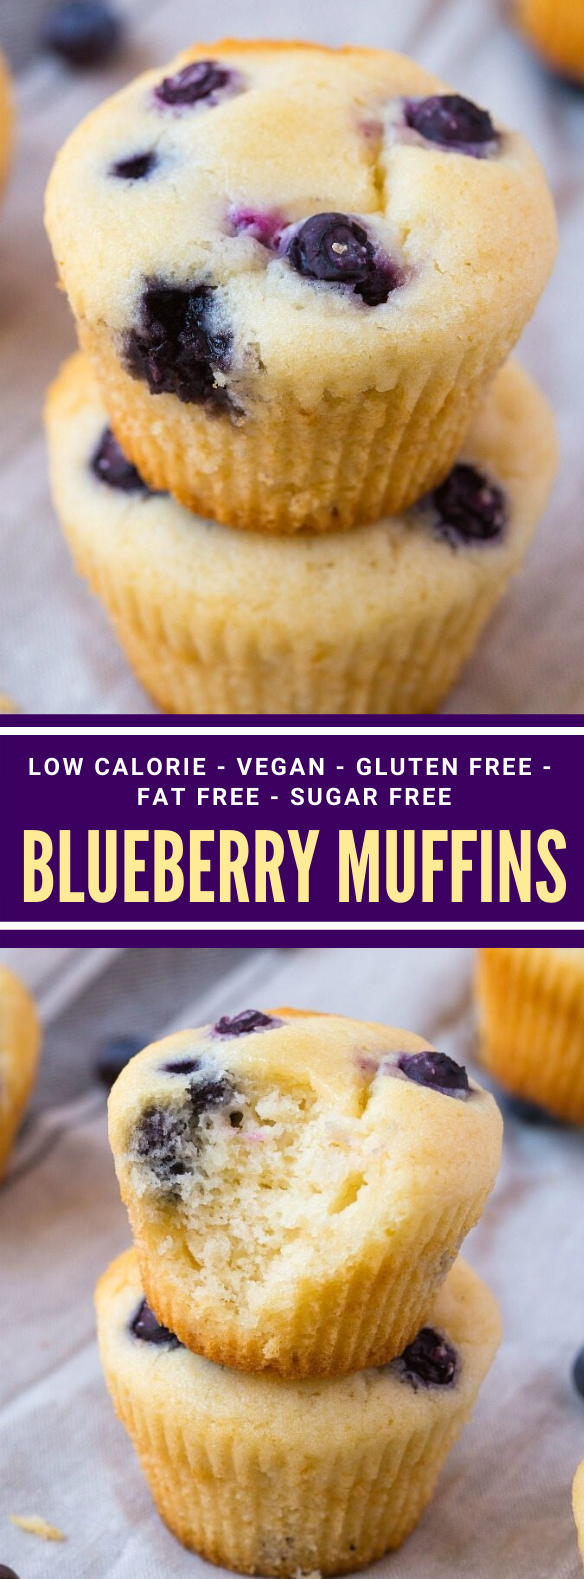 FAT FREE FLOURLESS BLUEBERRY MUFFINS (SUGAR FREE, VEGAN, GLUTEN FREE) #healthy #lowcalorie